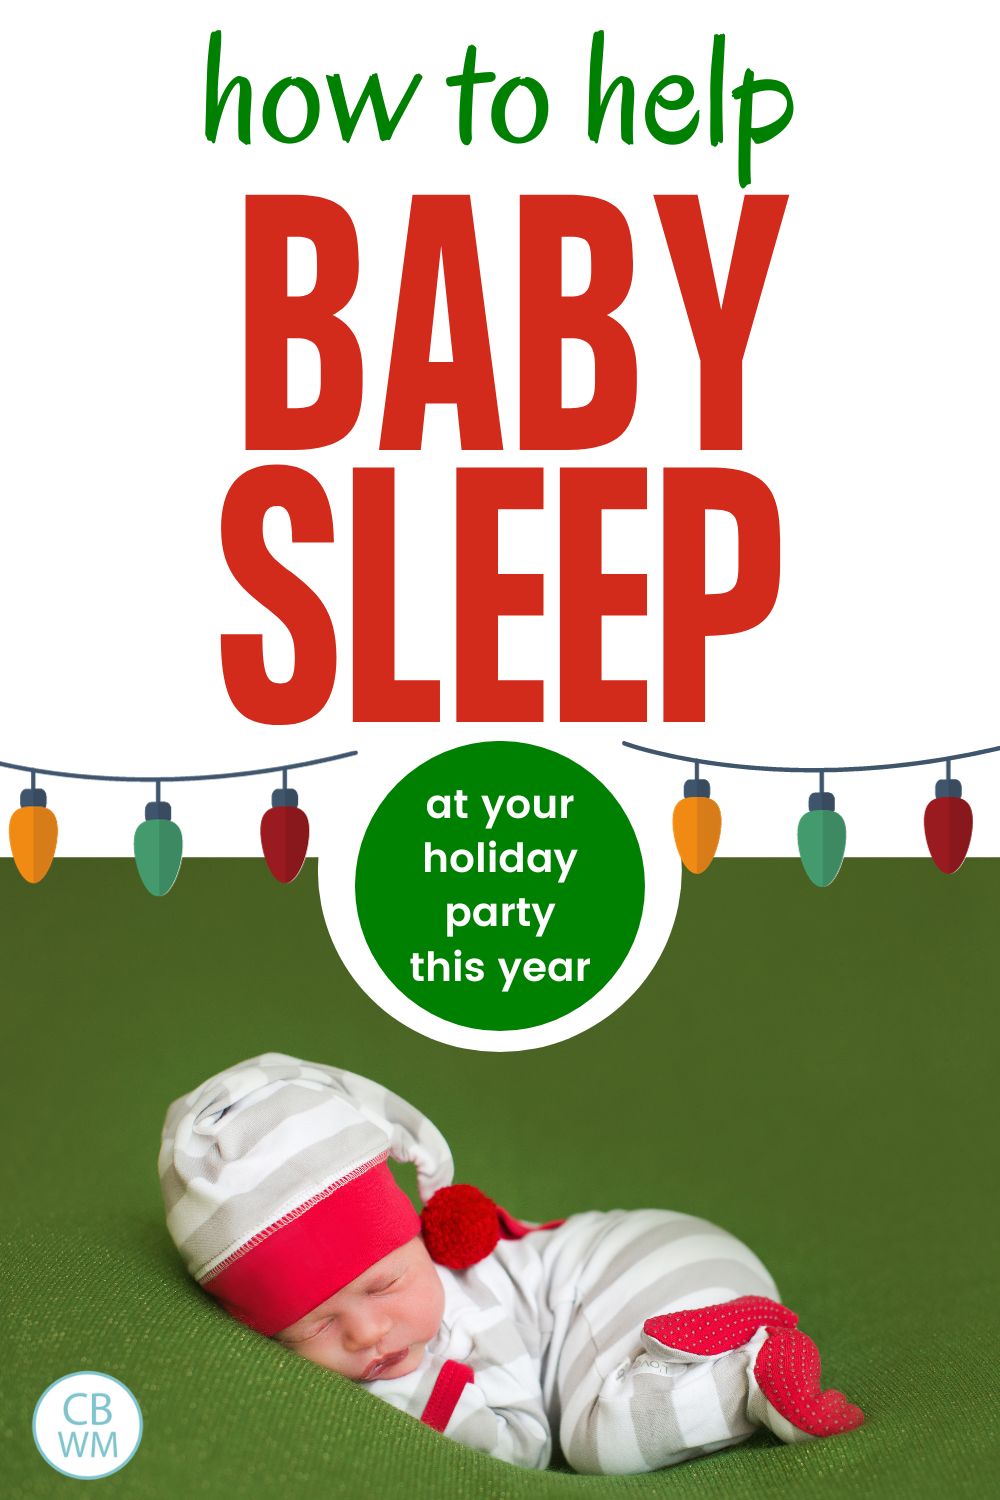 Help baby sleep at holiday party this year pinnable image